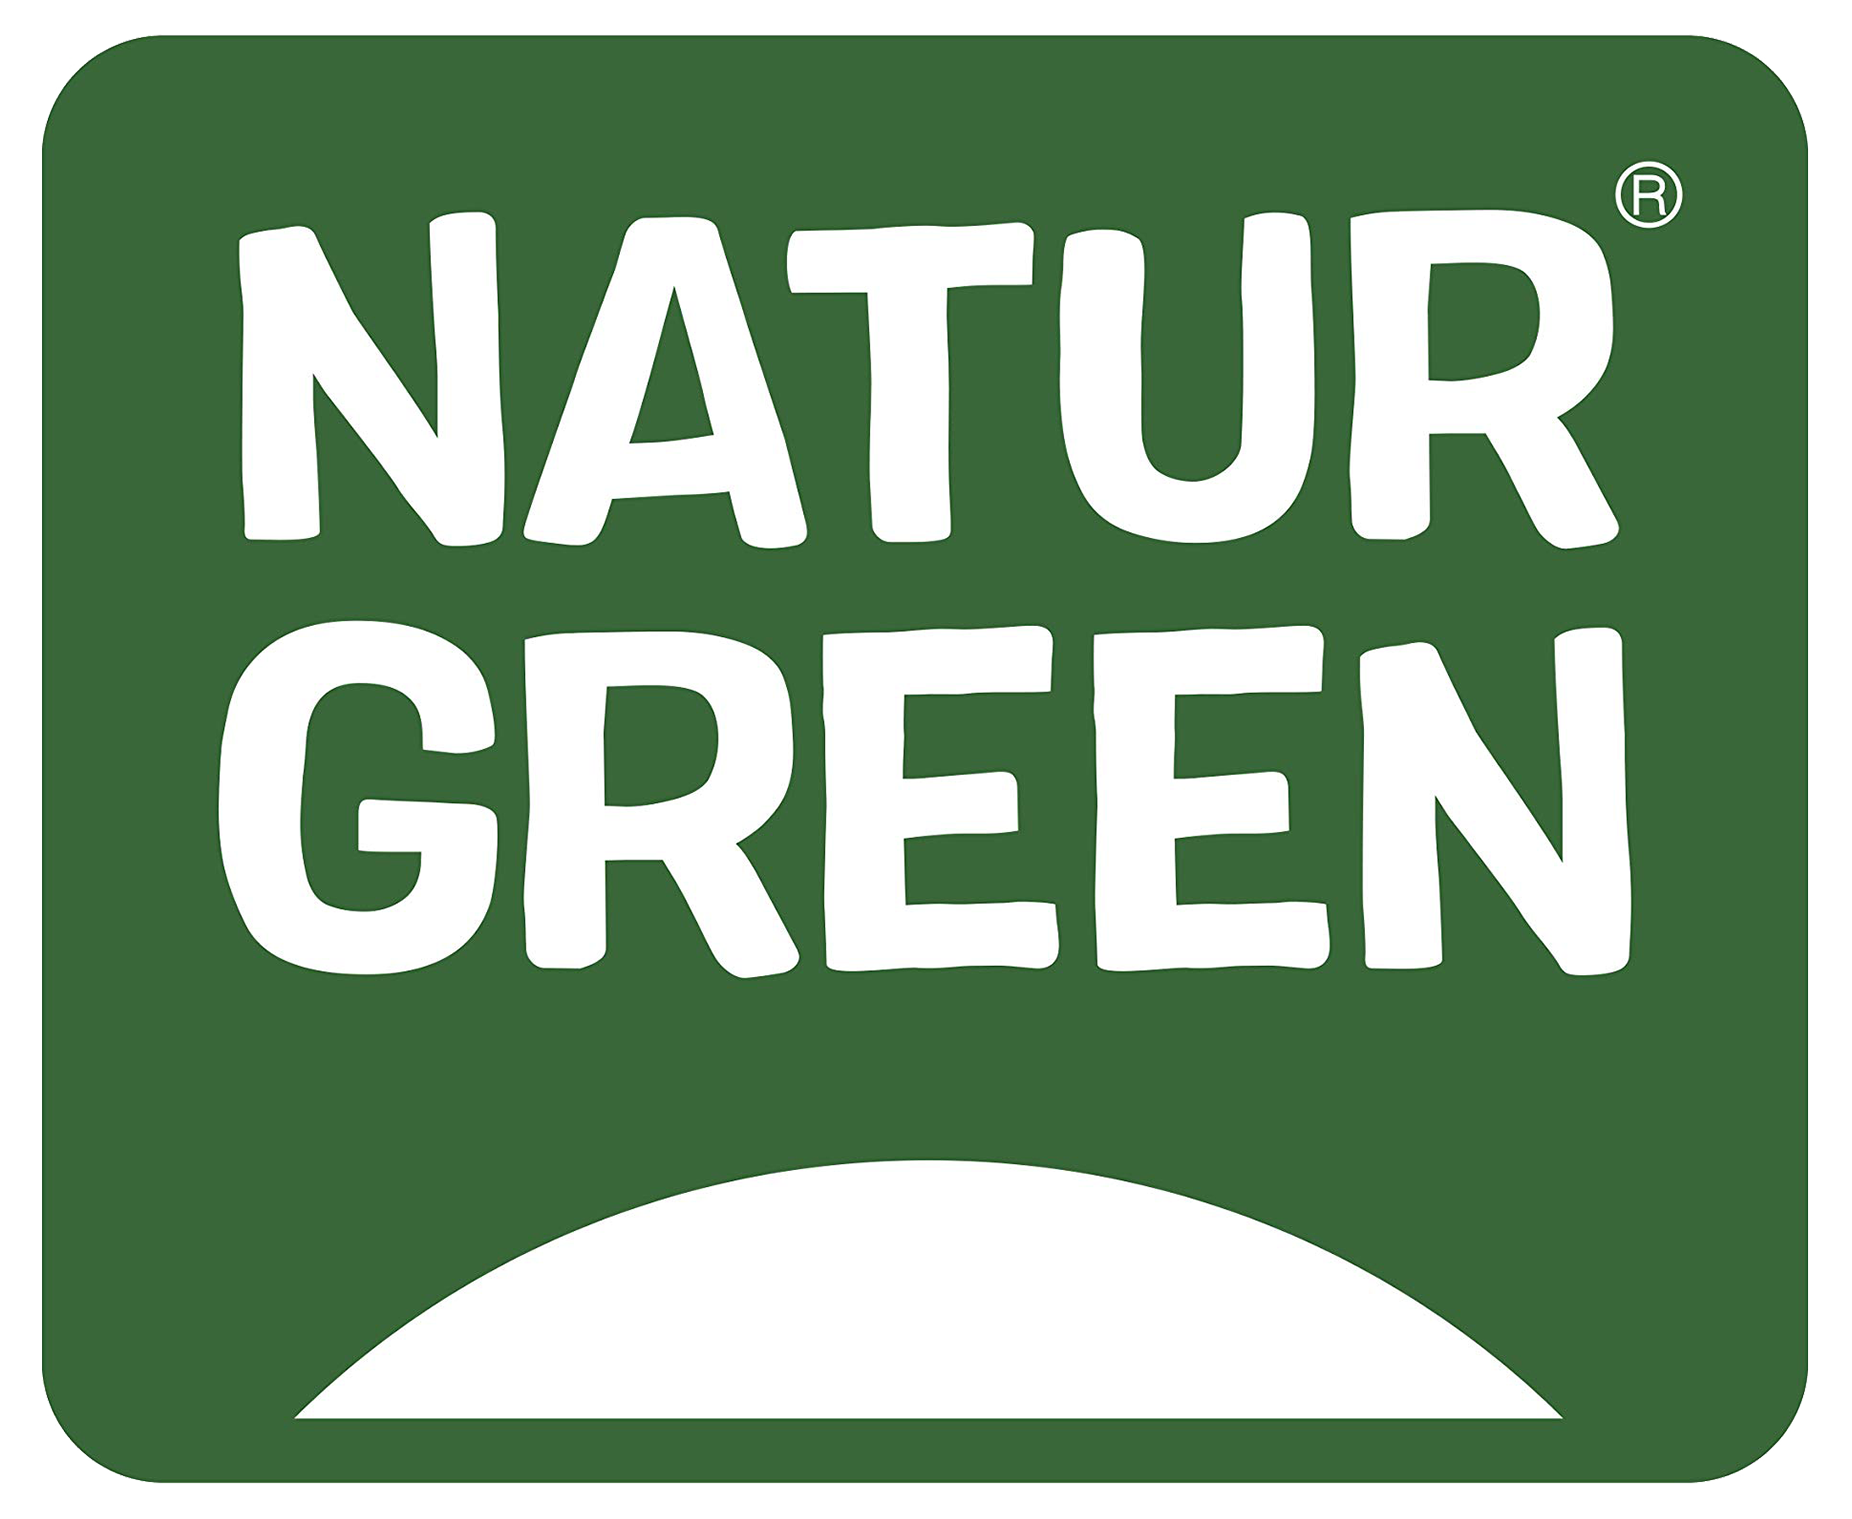 Naturgreen